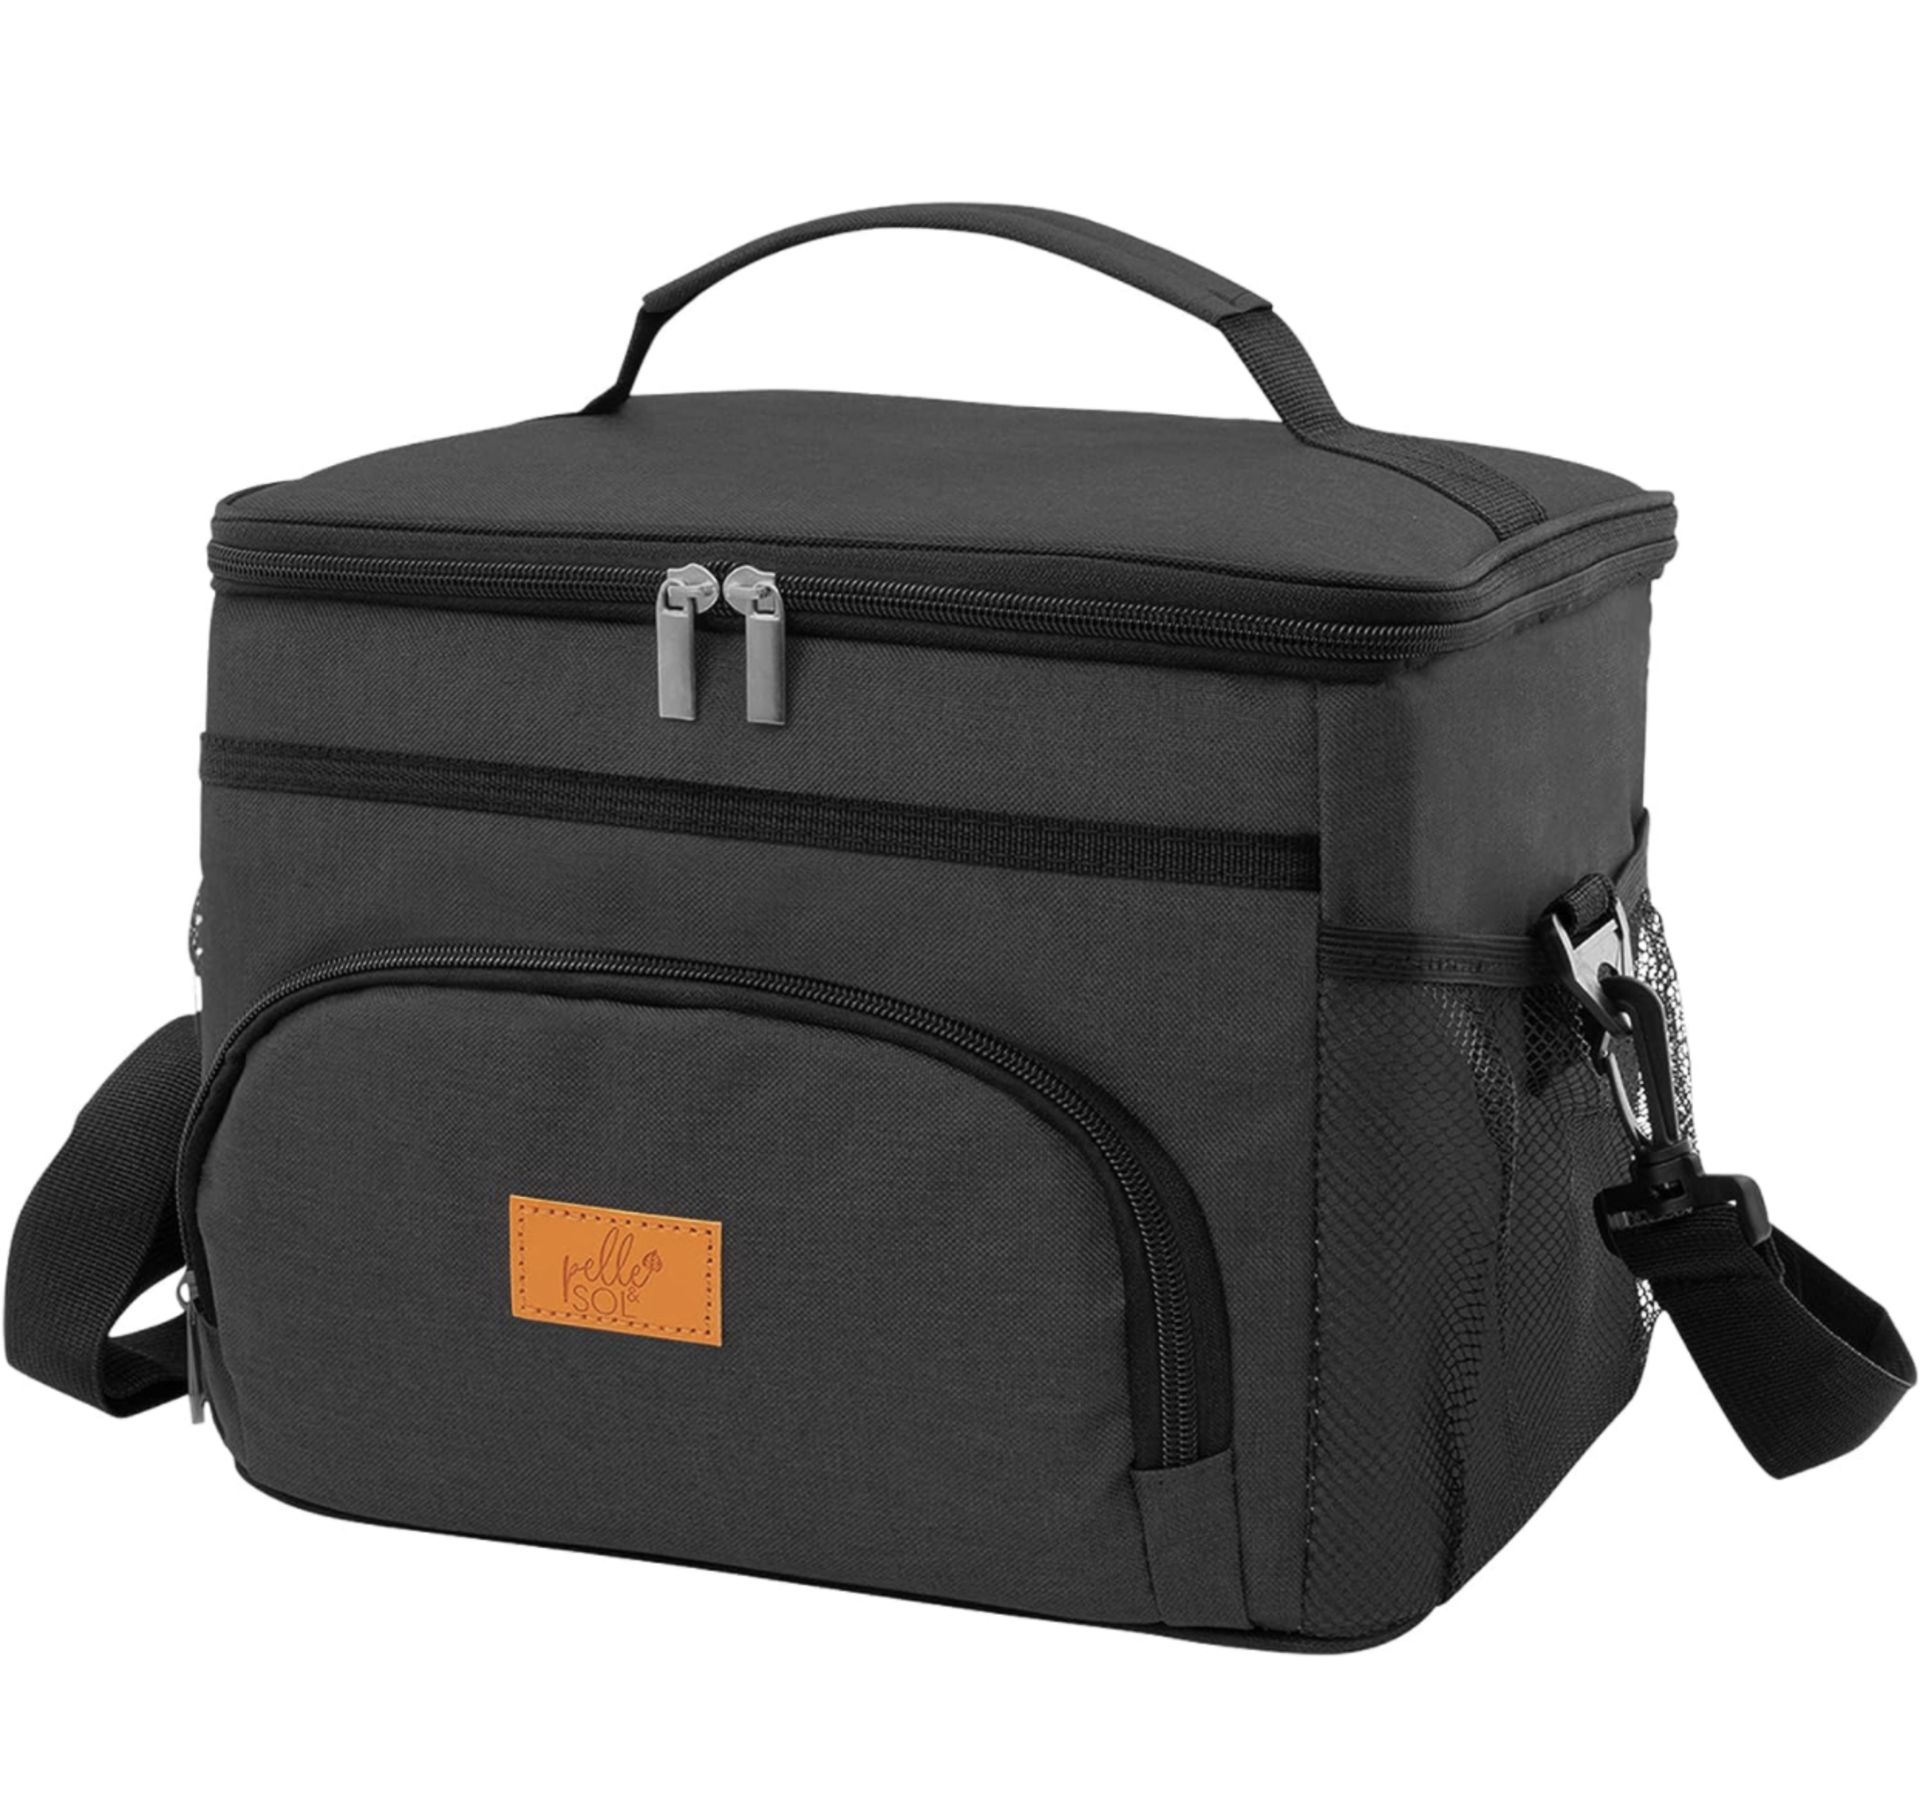 Set of 2 x Pelle & Sol 15L Picnic Bag Insulated Lunch Bag Cooler Bag - Image 2 of 3